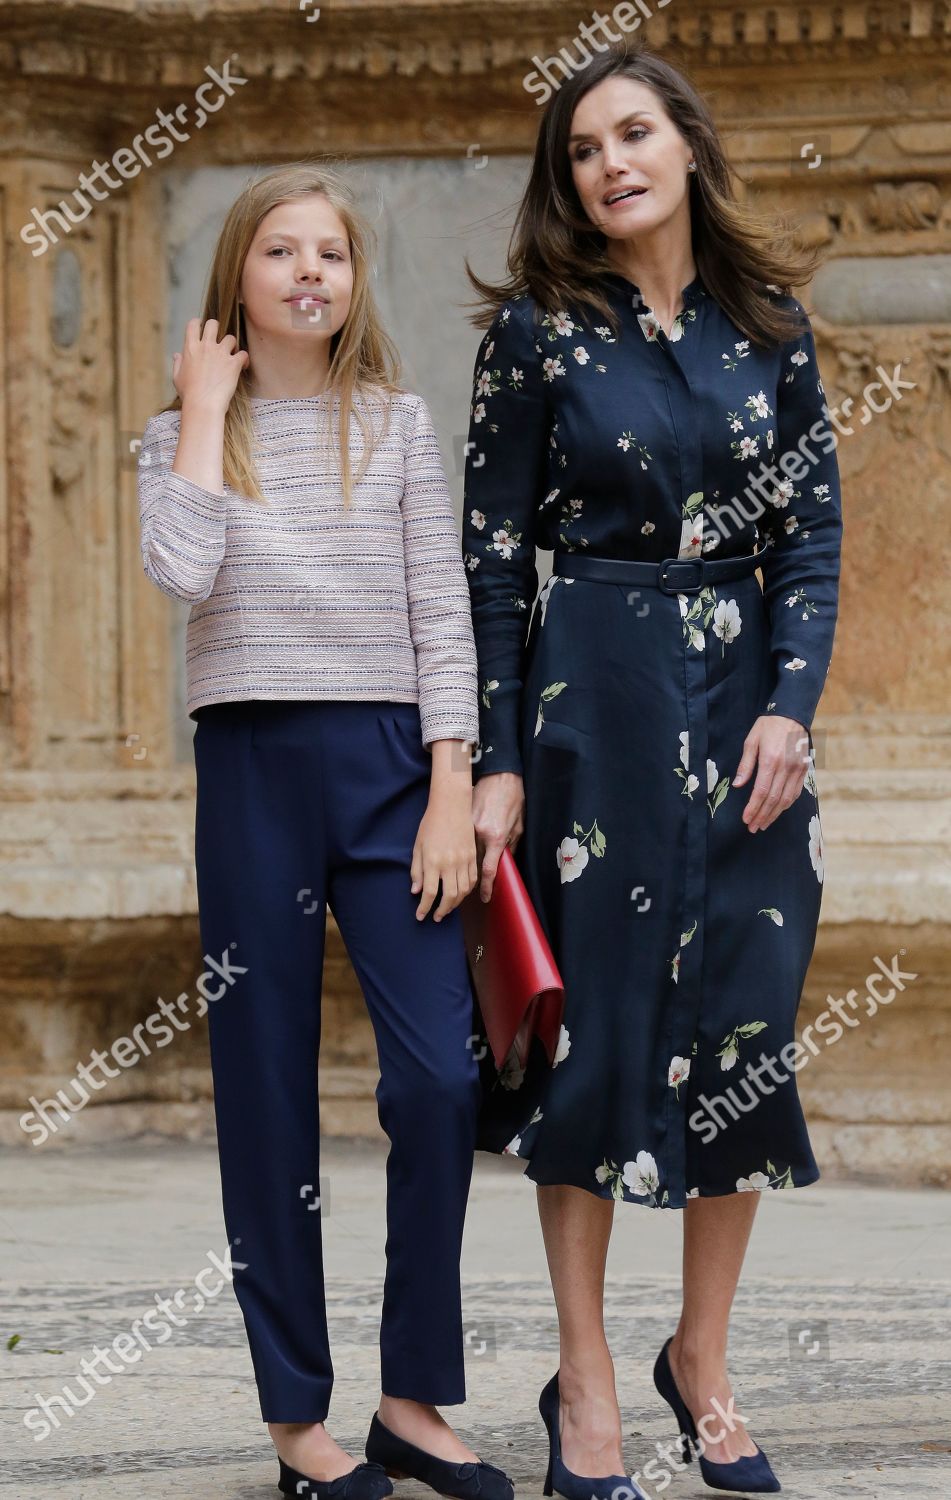 spanish-royal-family-attend-mass-madrid-spain-shutterstock-editorial-10215862k.jpg